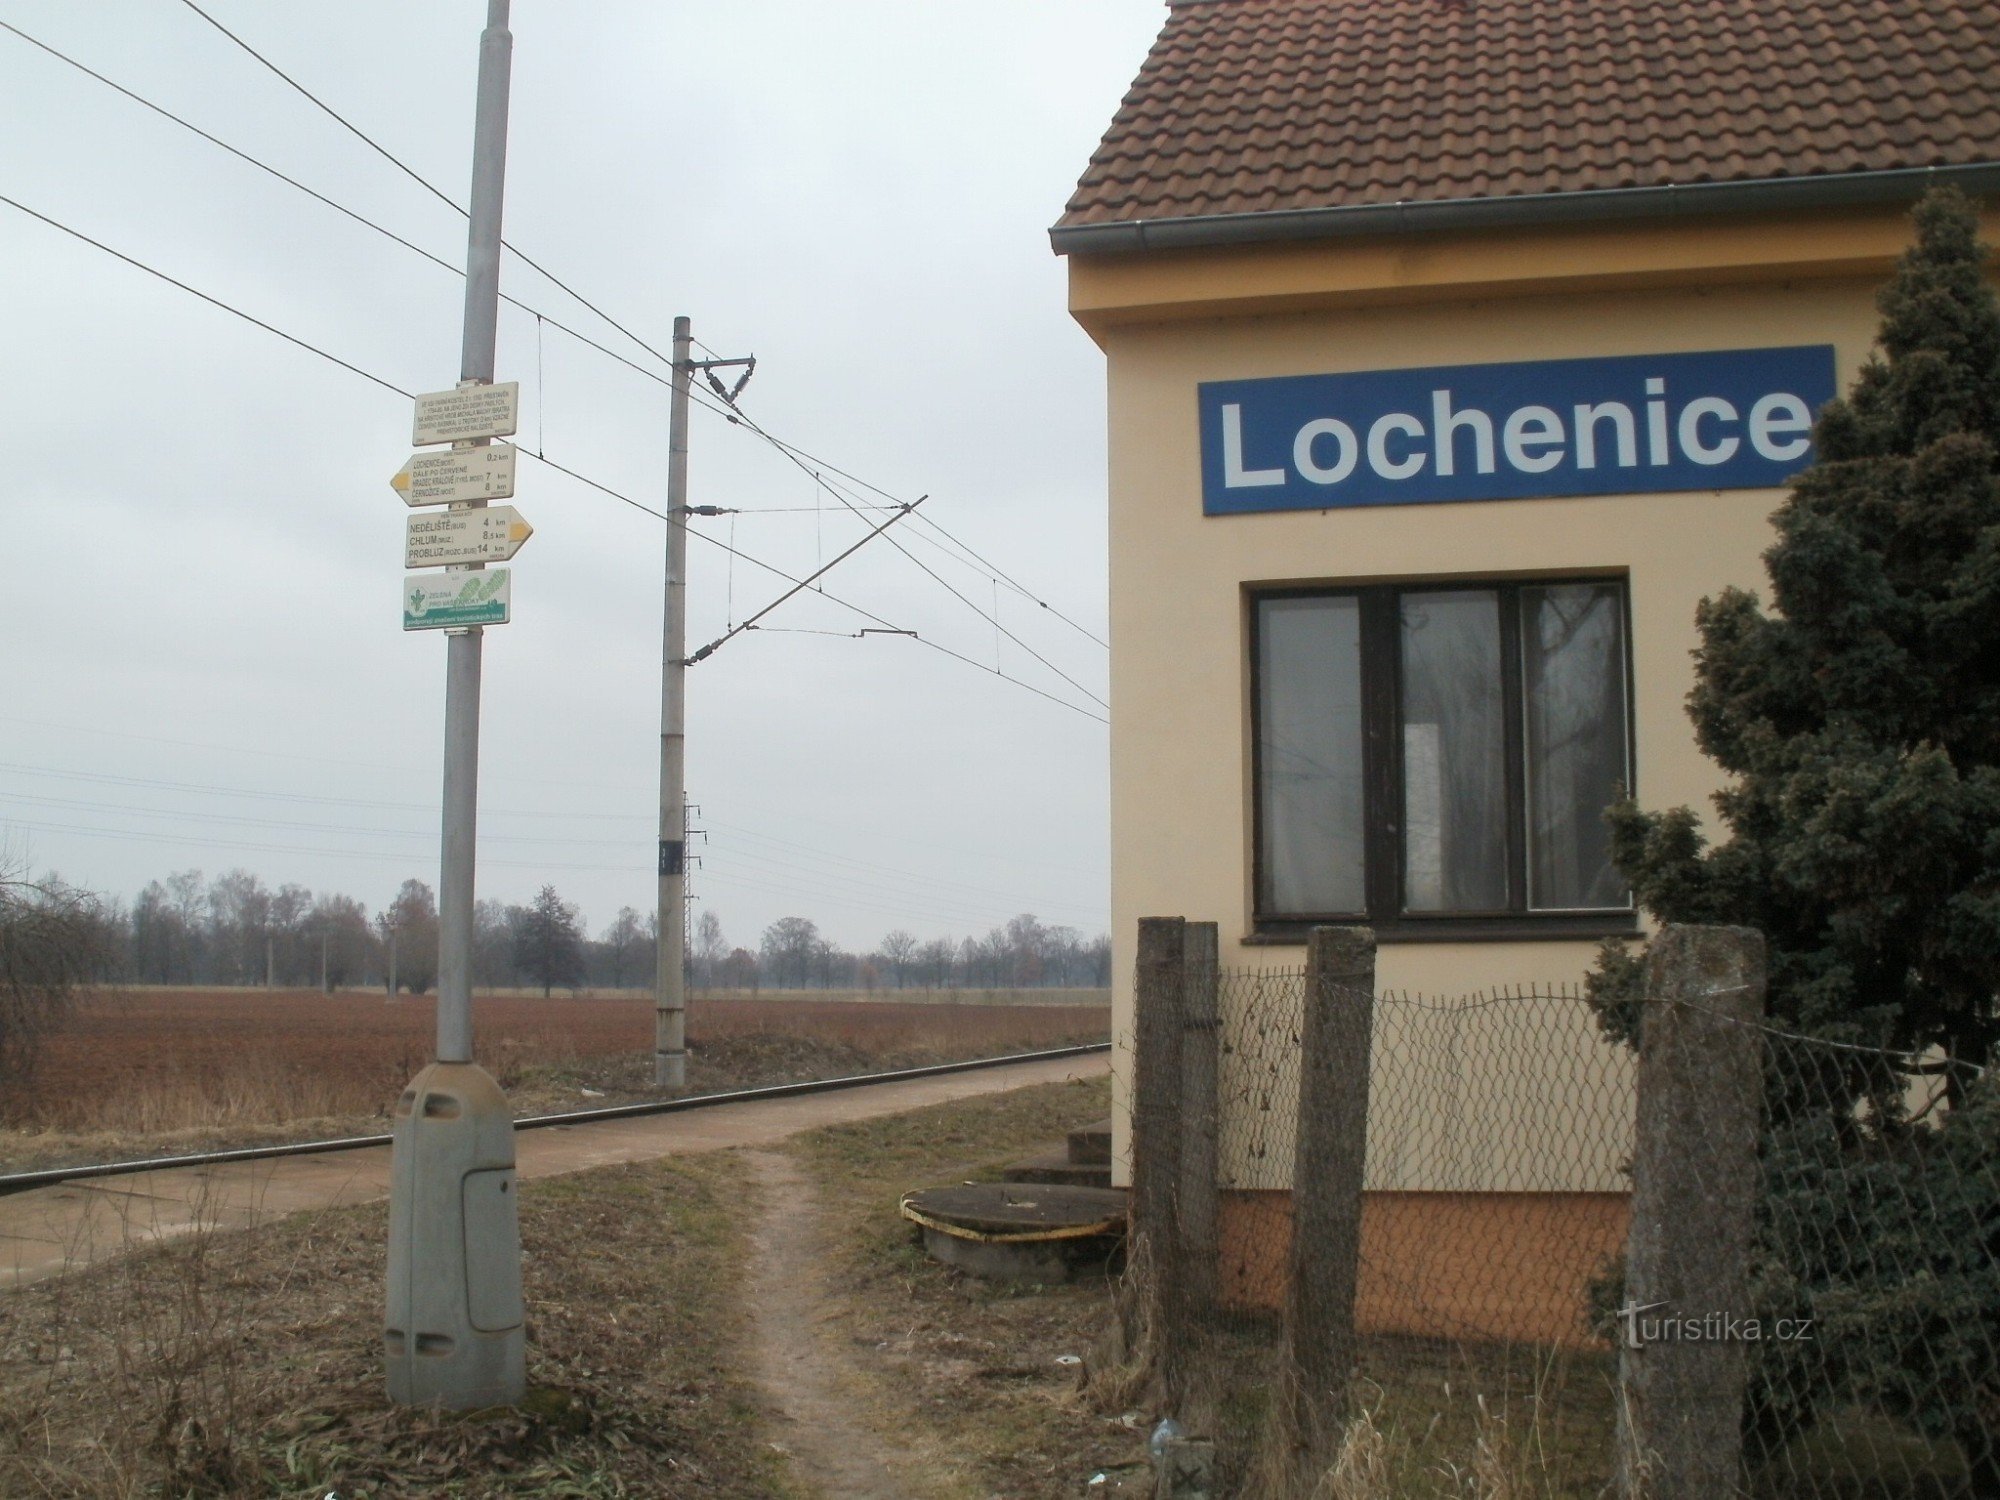 entroncamento turístico Lochenice - ferrovia